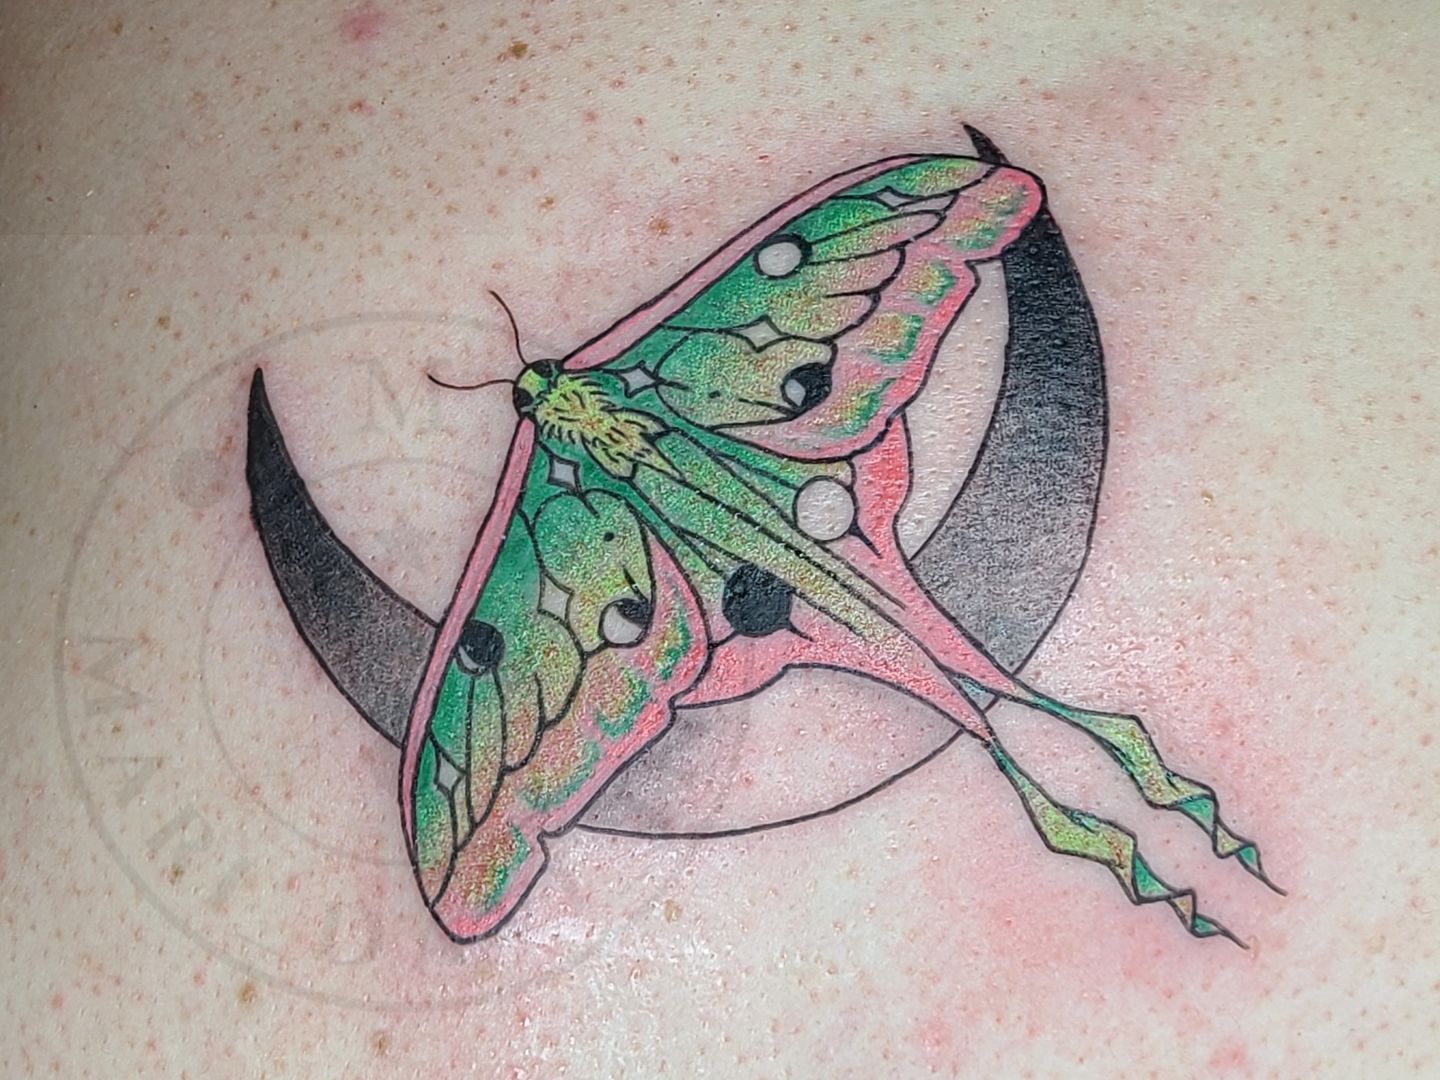 20 Luna Moth Tattoos